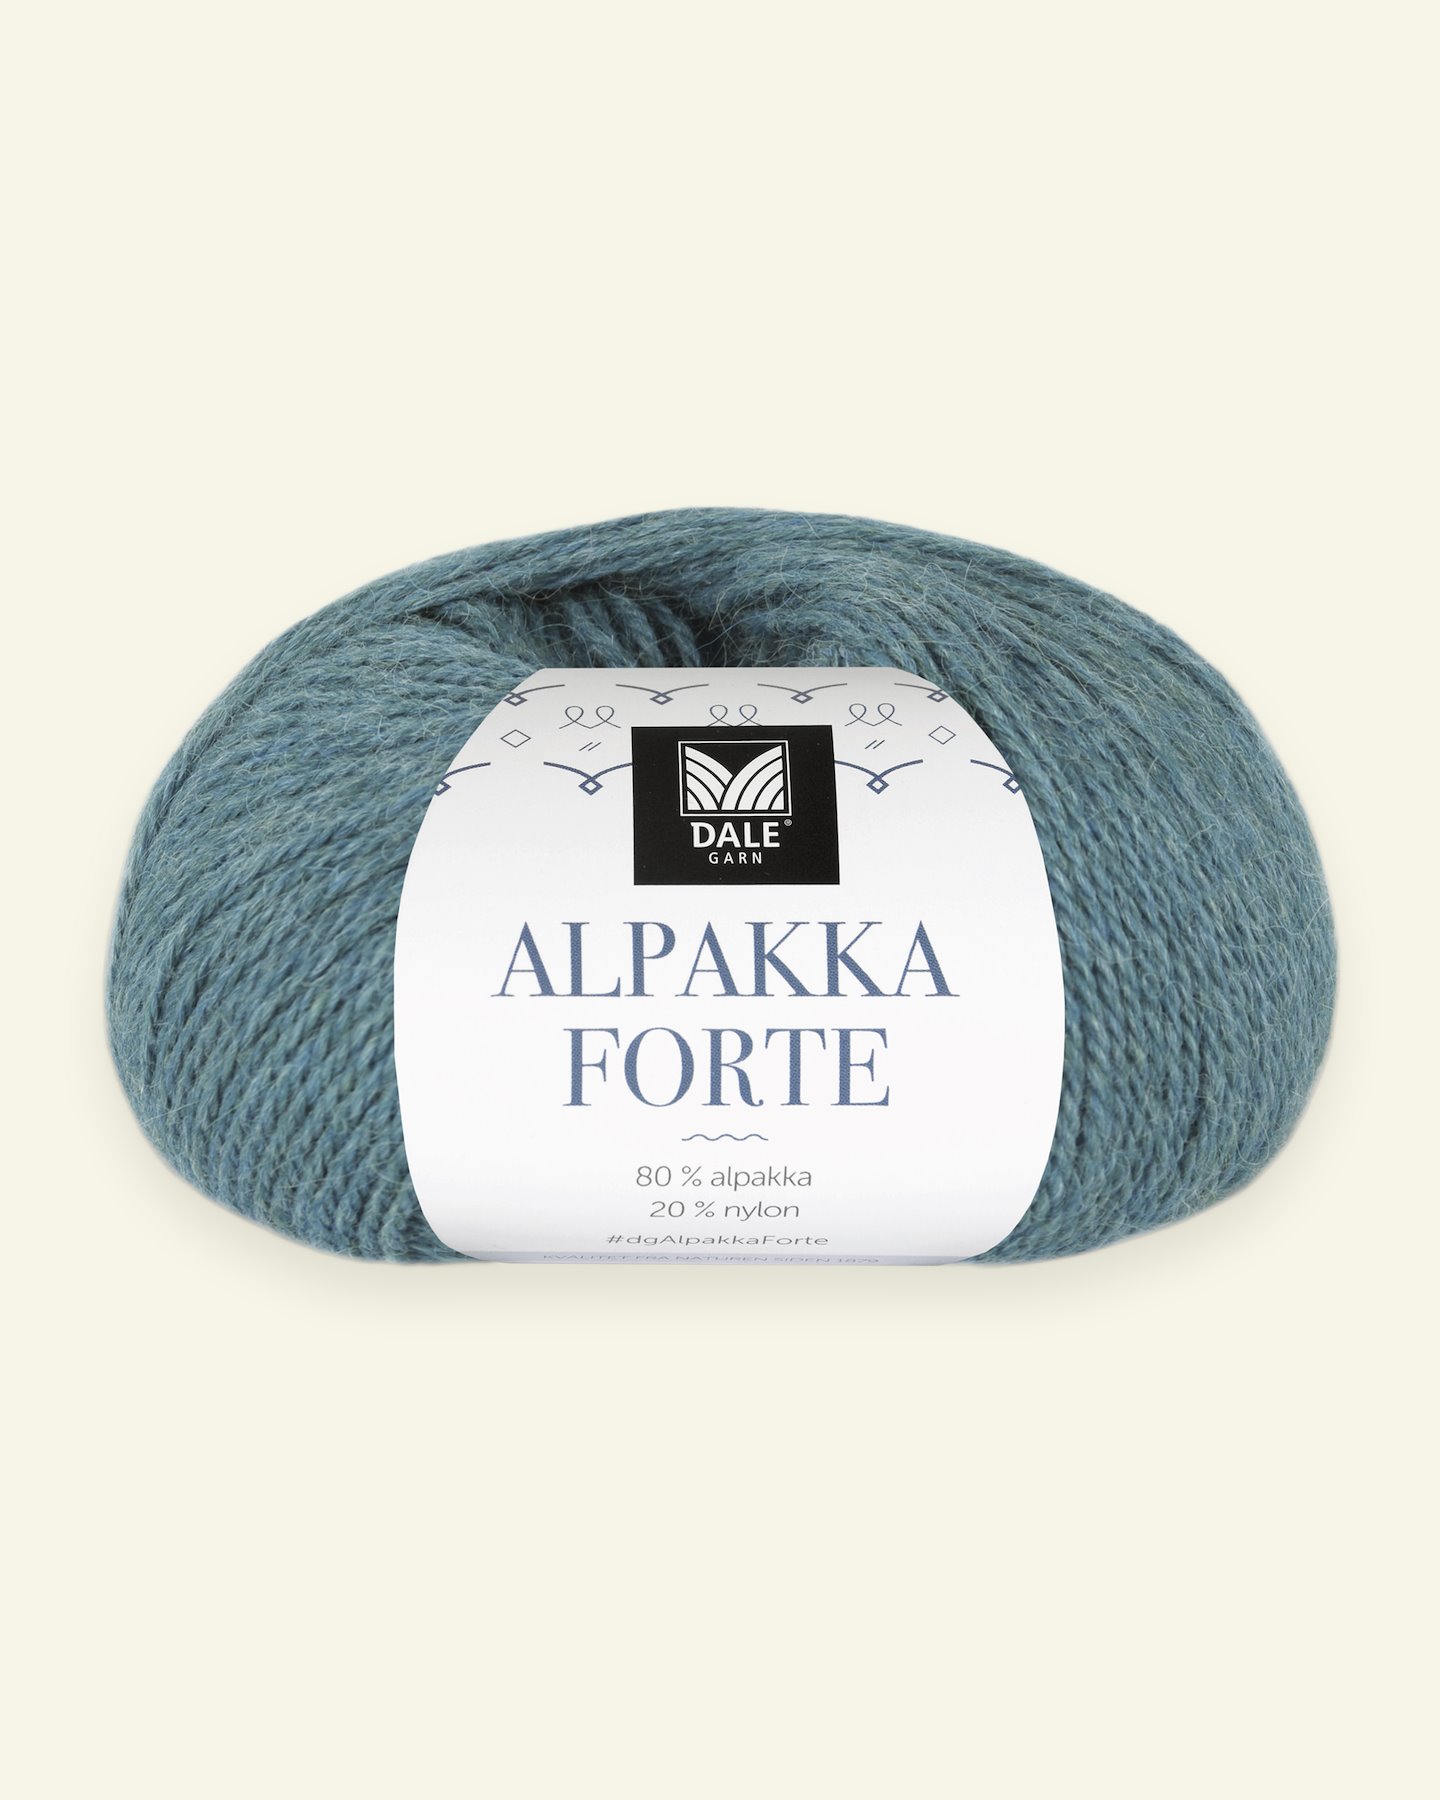 Dale Garn, alpackagarn "Alpakka Forte", mörk aqua mel. (730) 90000456_pack